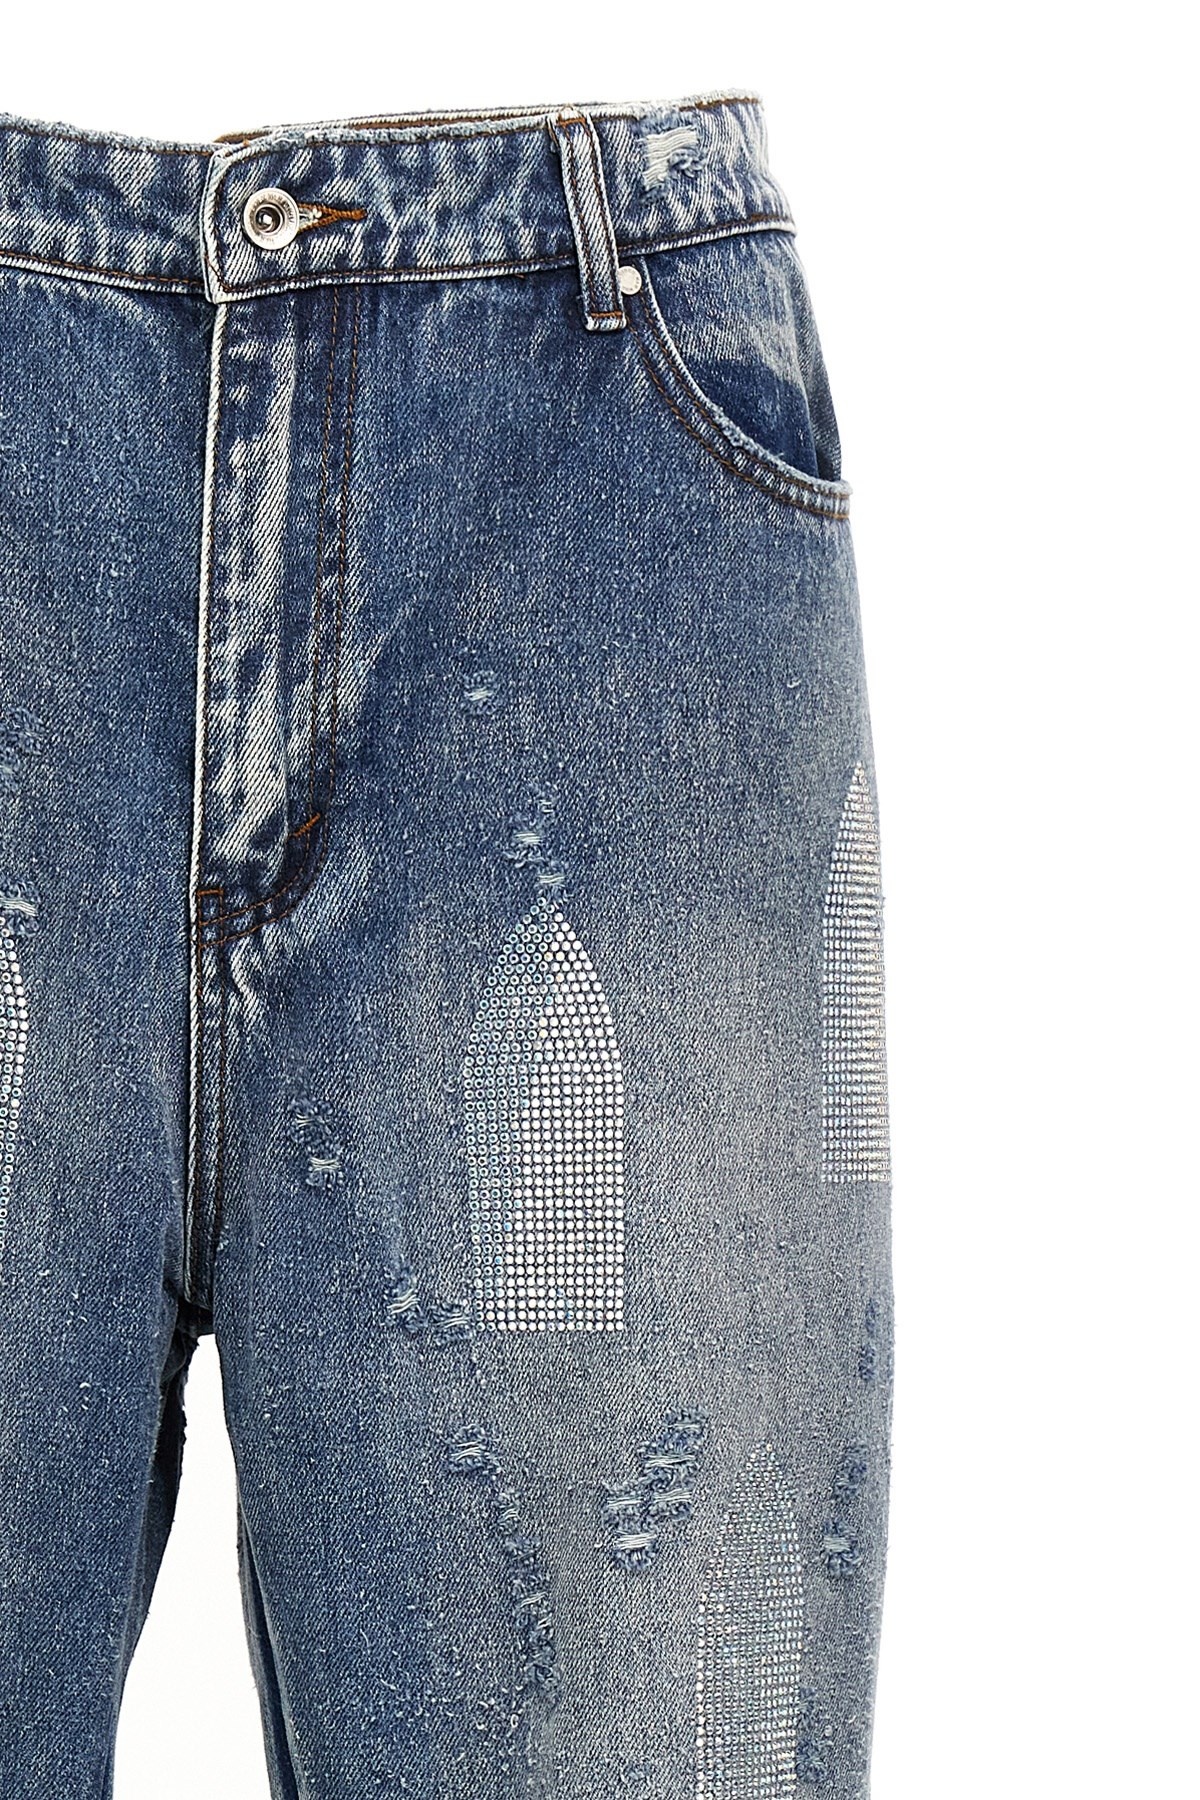 'Rhinestone Washed Denim' jeans - 3